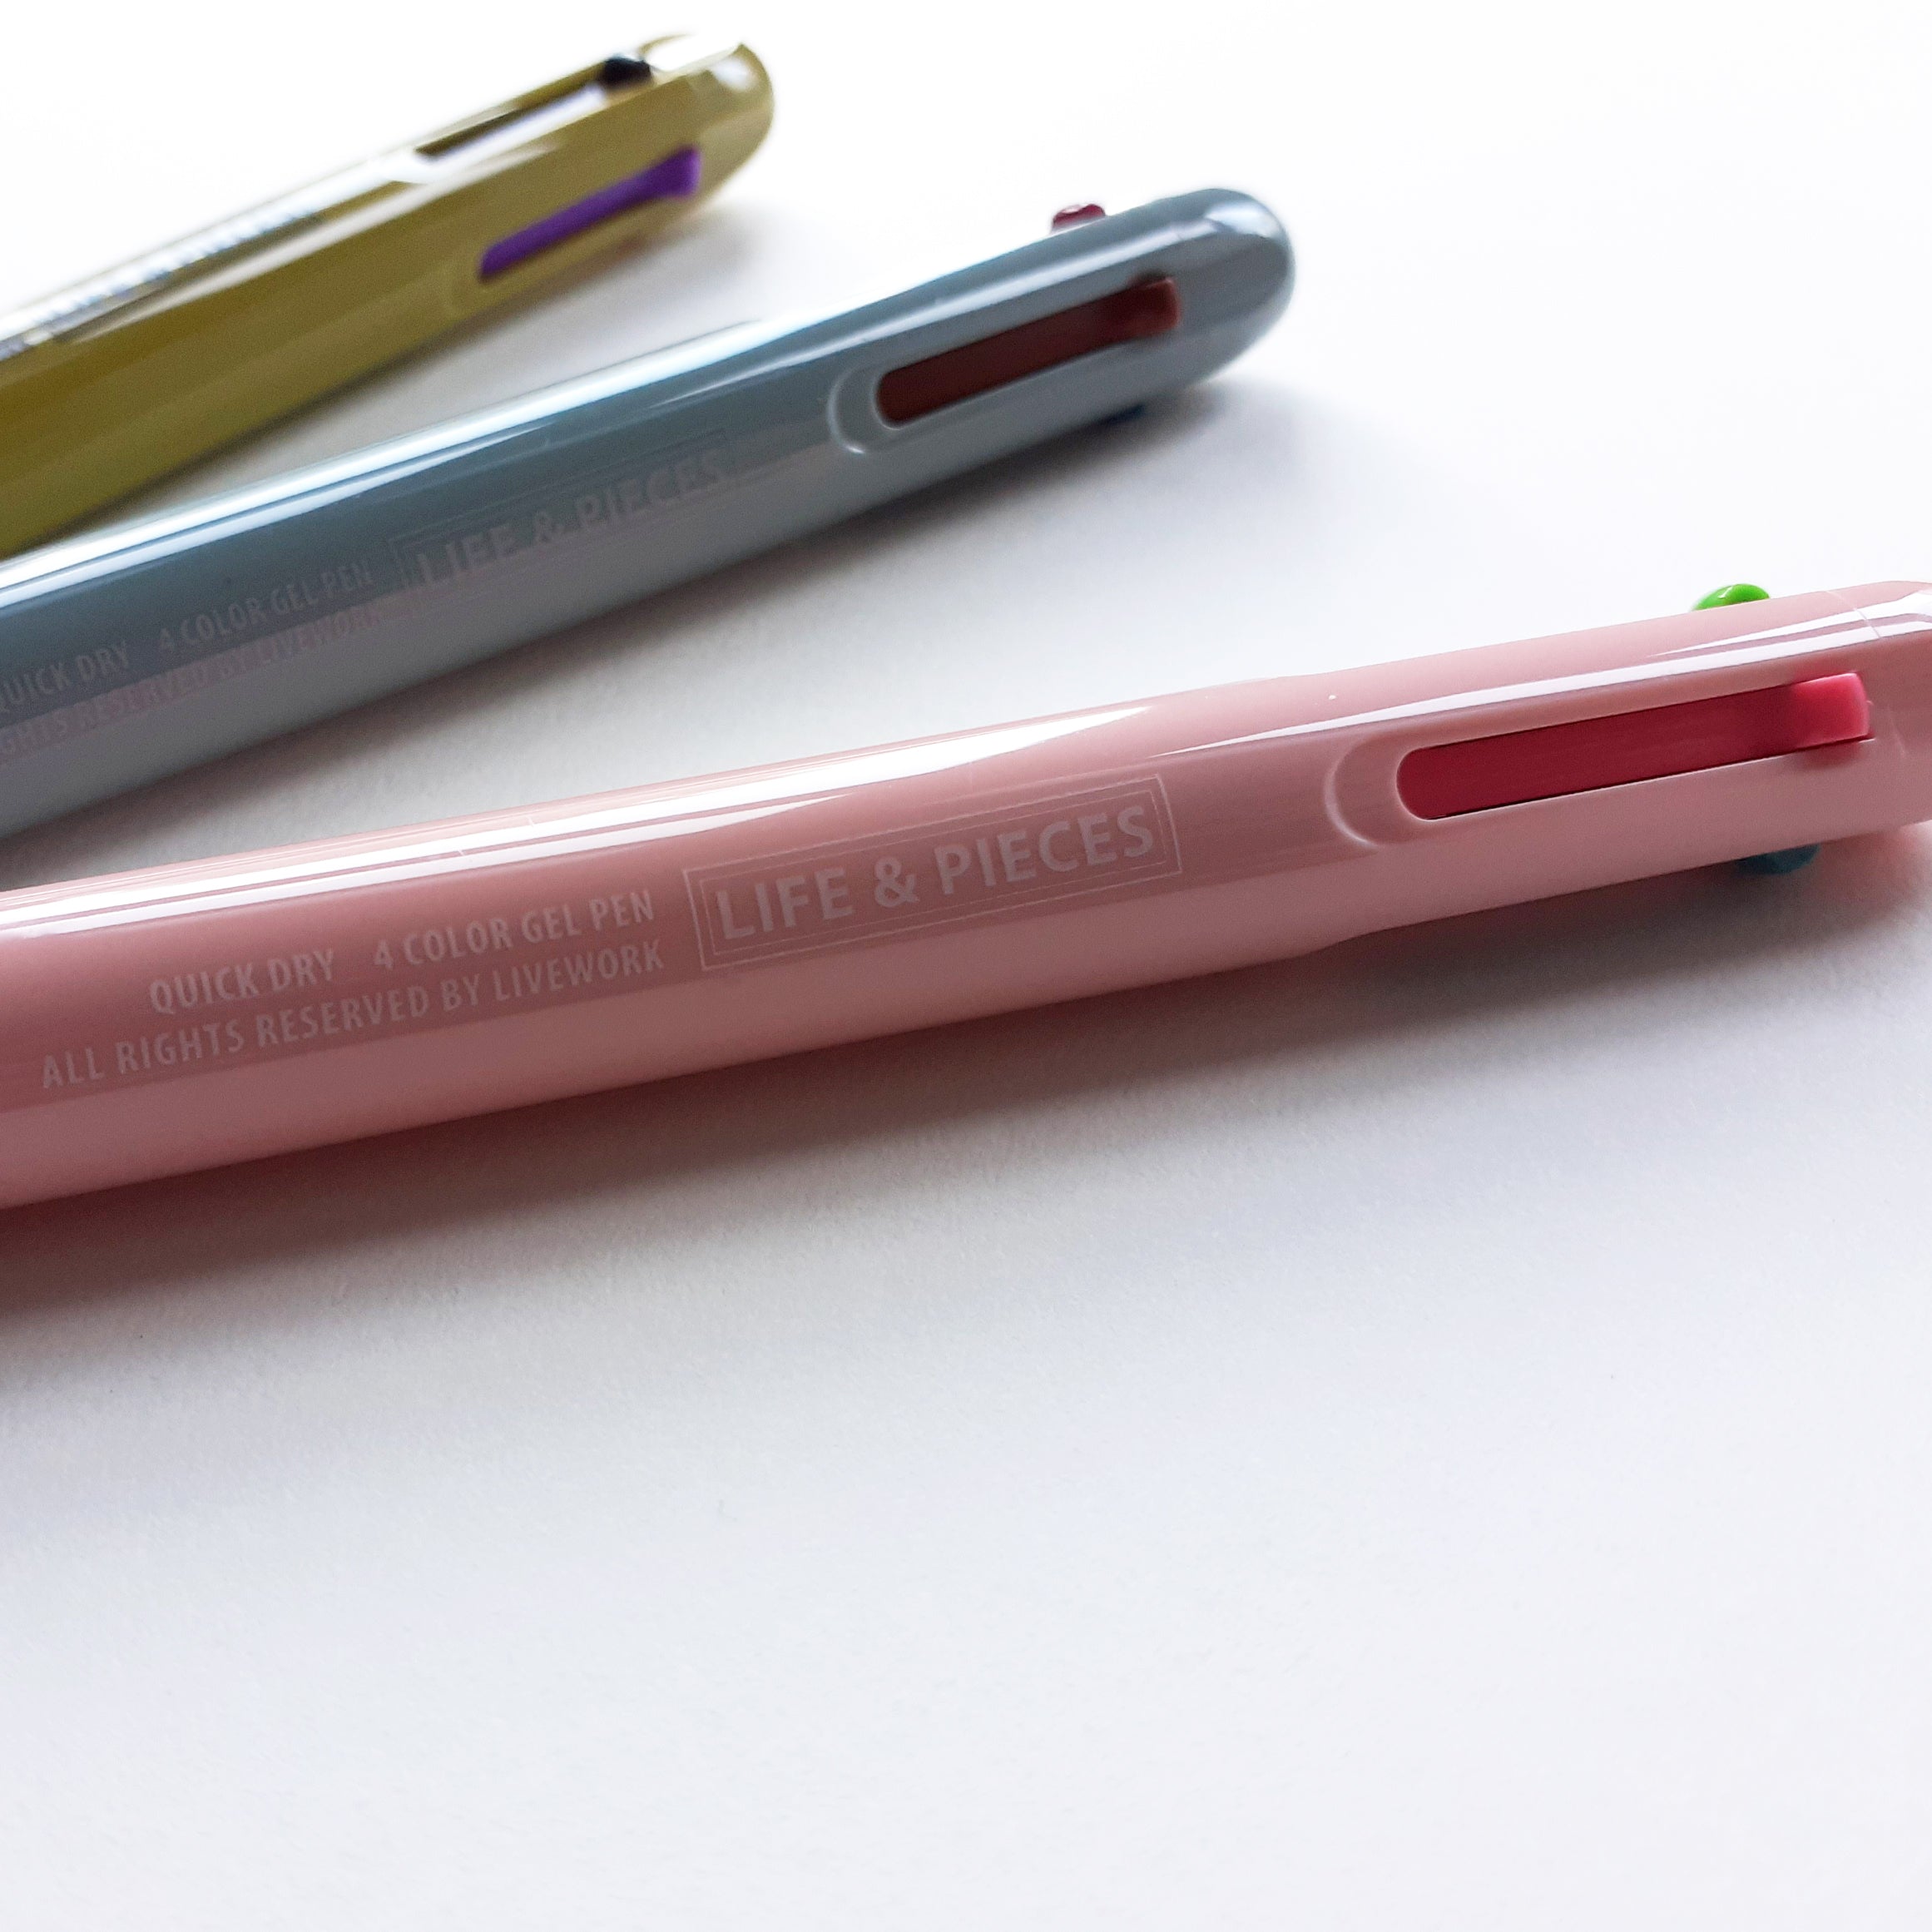 Life & Pieces 4 Color Gel Pen, Pink